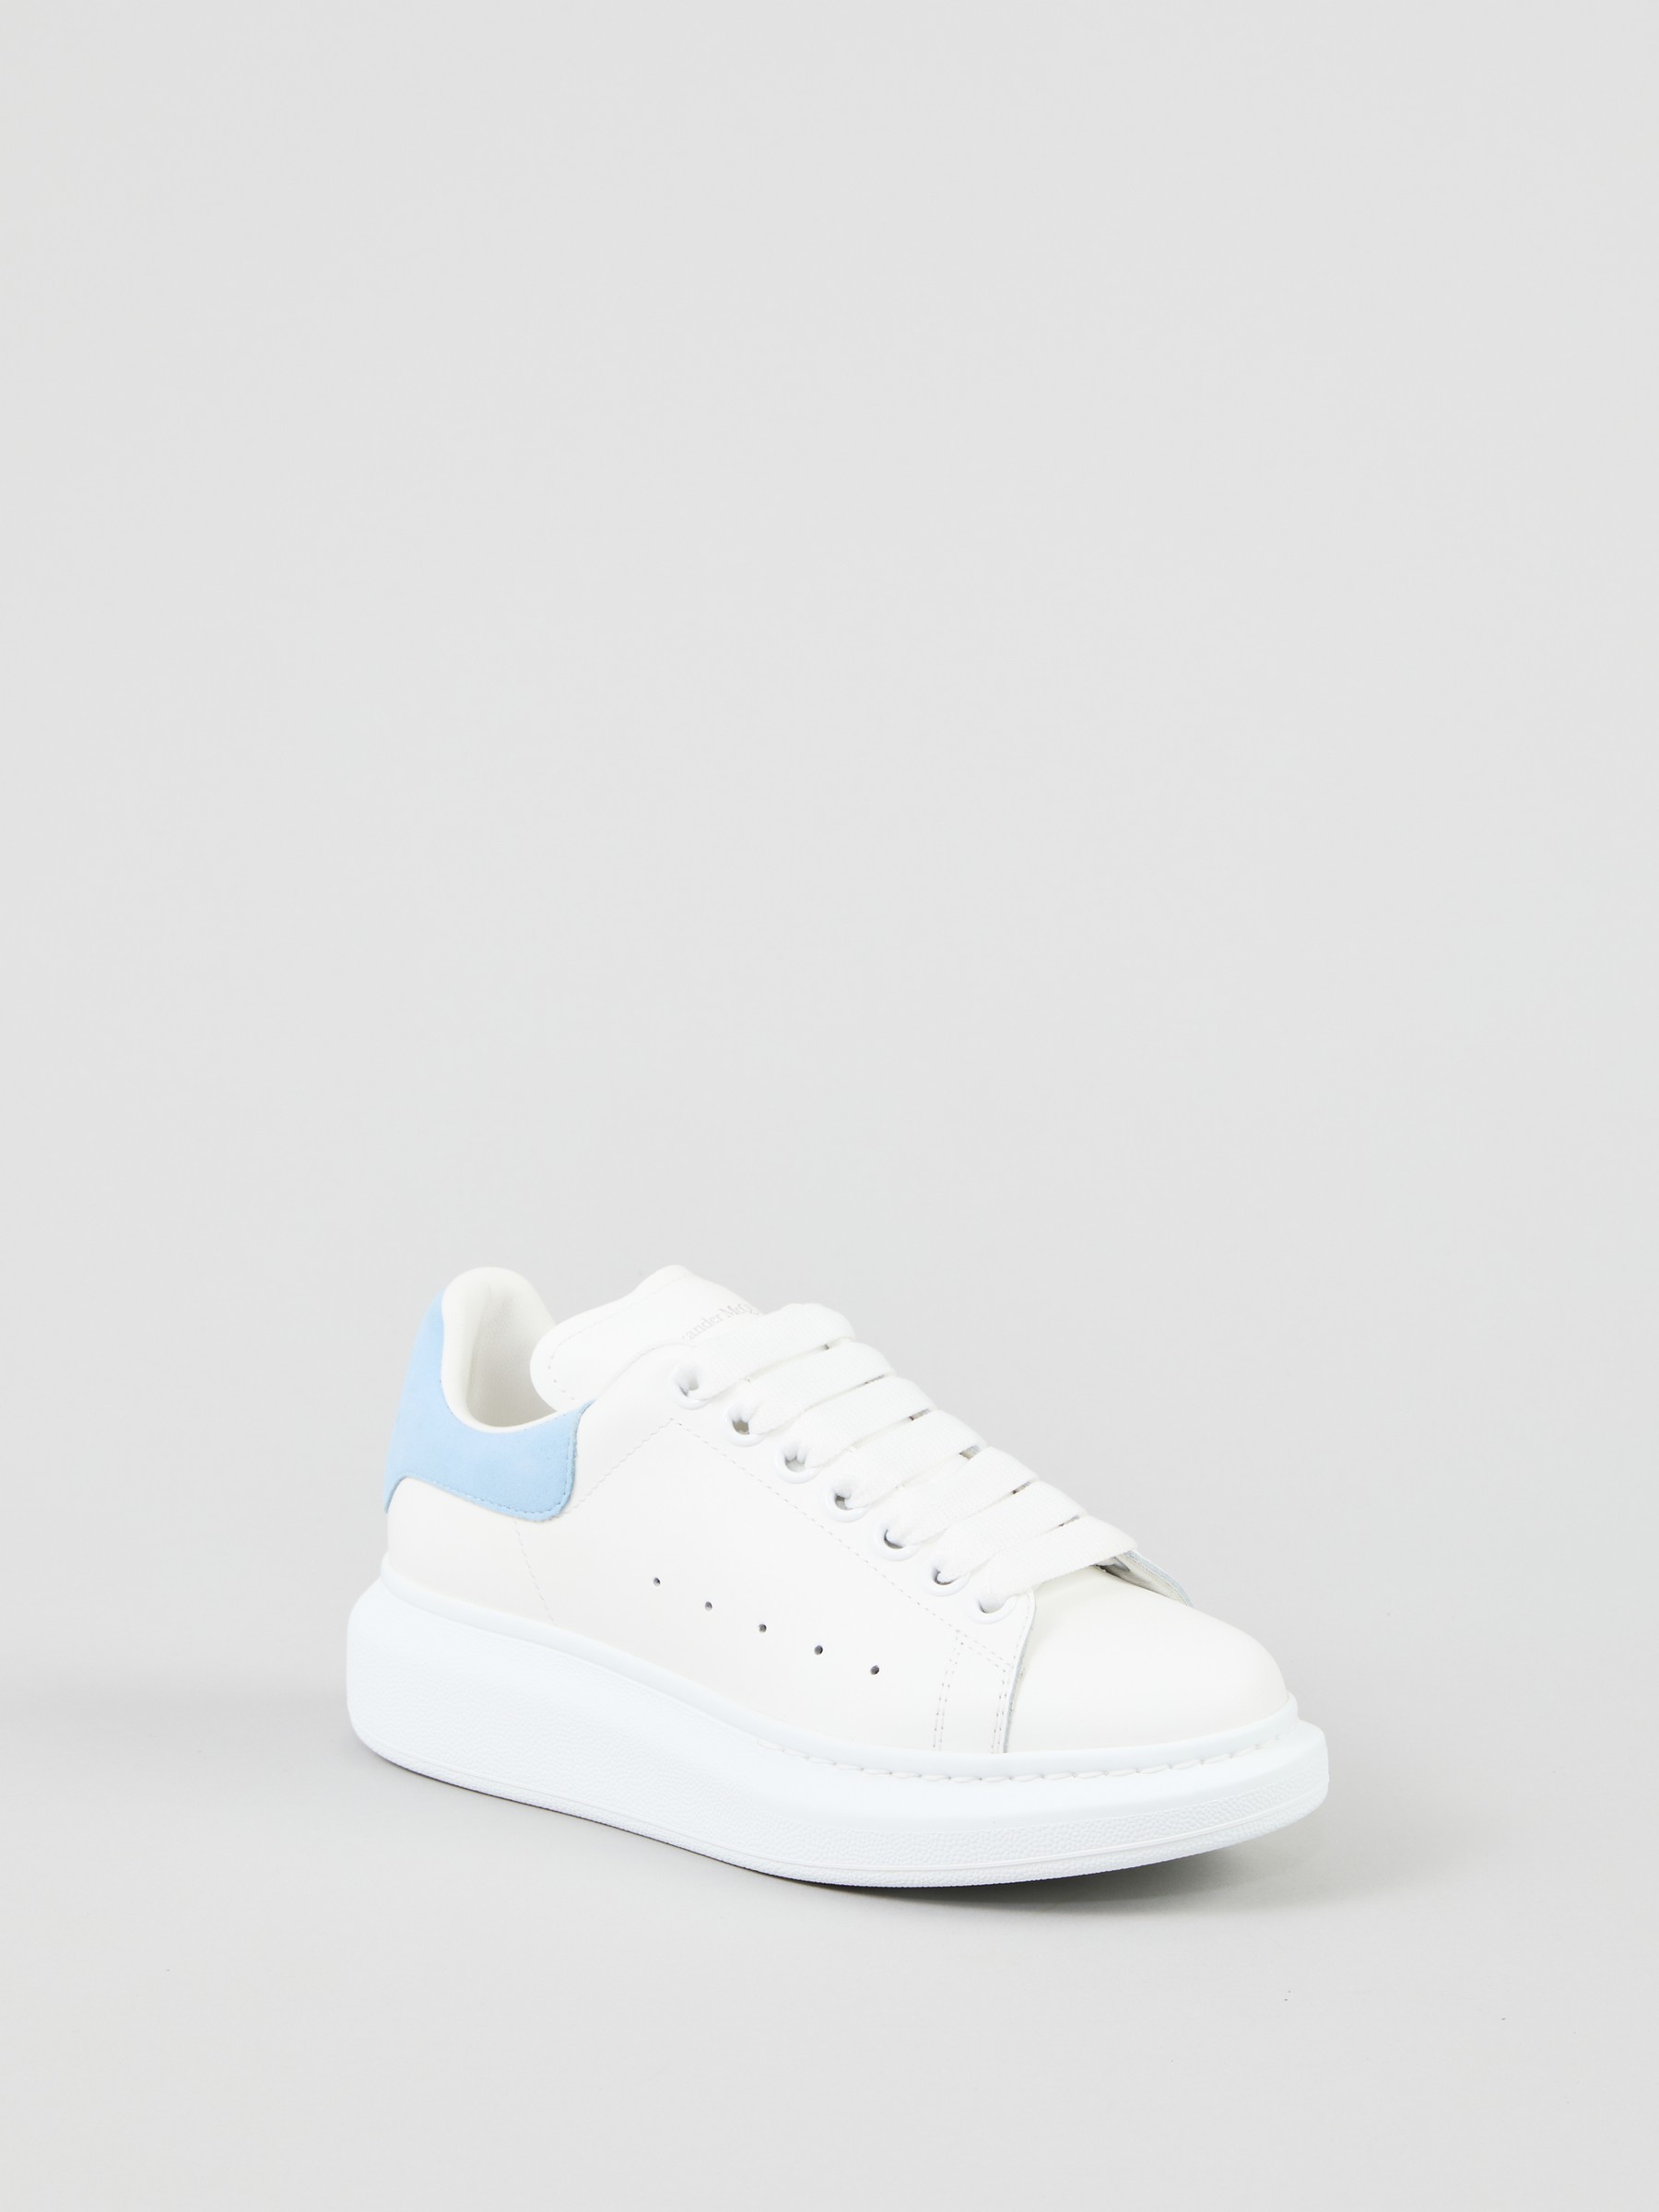 McQueen Sneaker with wide sole blue | Sneakers